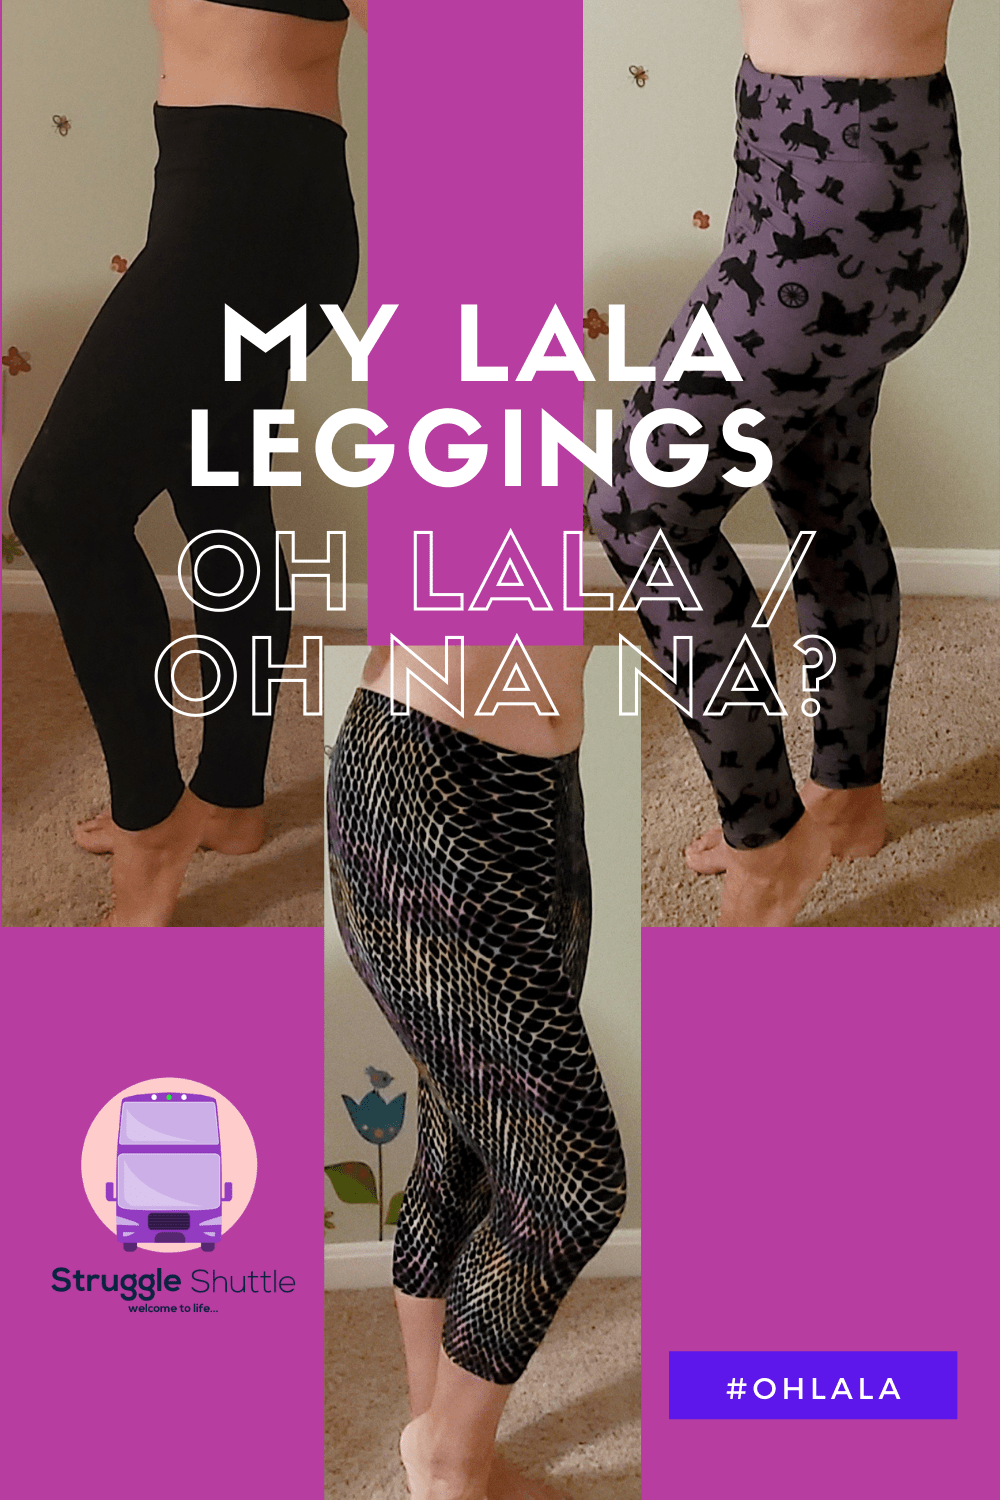 My LaLa Leggings Review  Oh La La or Oh Na Na? - Struggle Shuttle